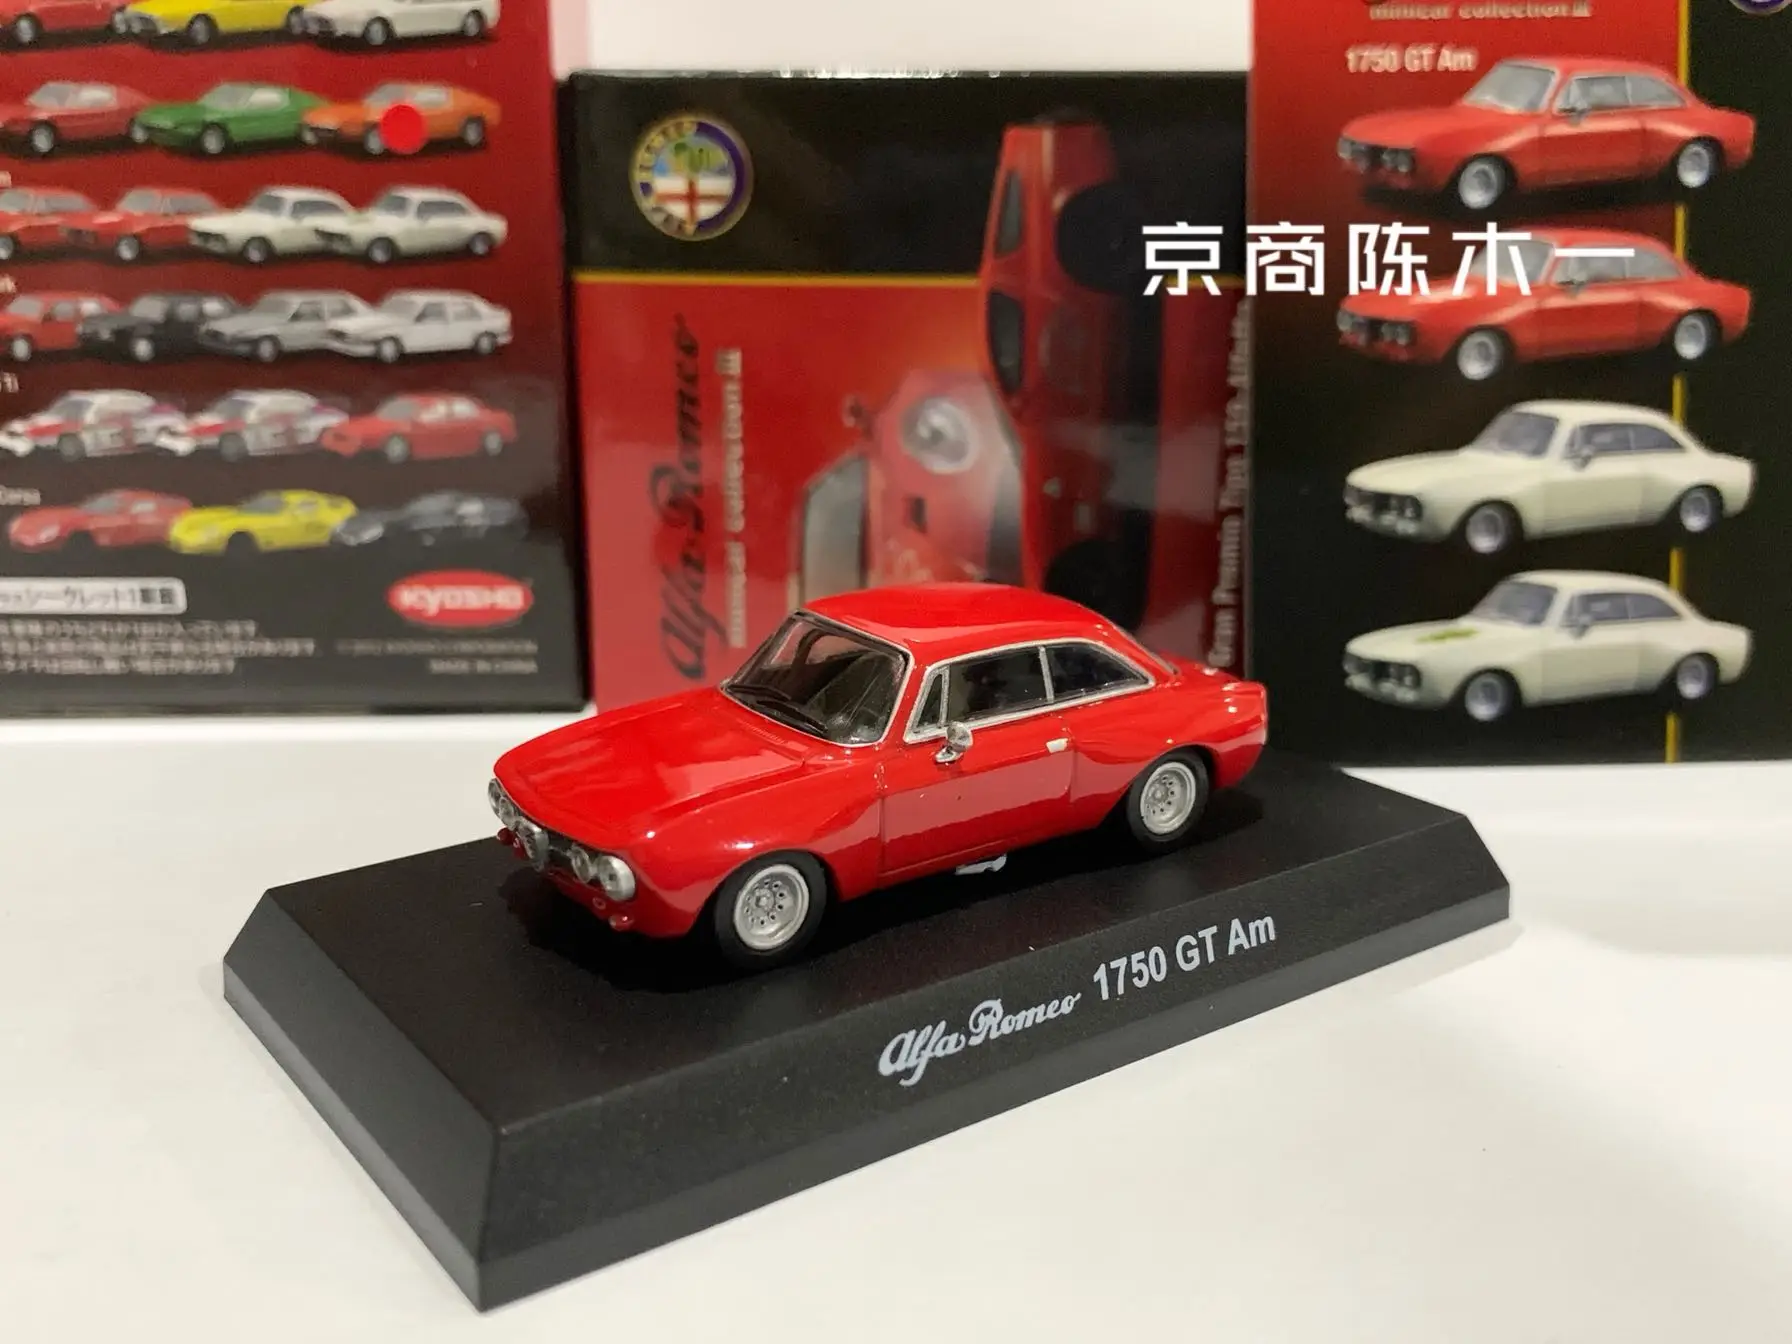 kyosho-modelo-alfa-romeo-1-64-gt-am-lm-f1-racing-coleccion-de-coches-de-aleacion-fundida-a-presion-decoracion-juguetes-1750